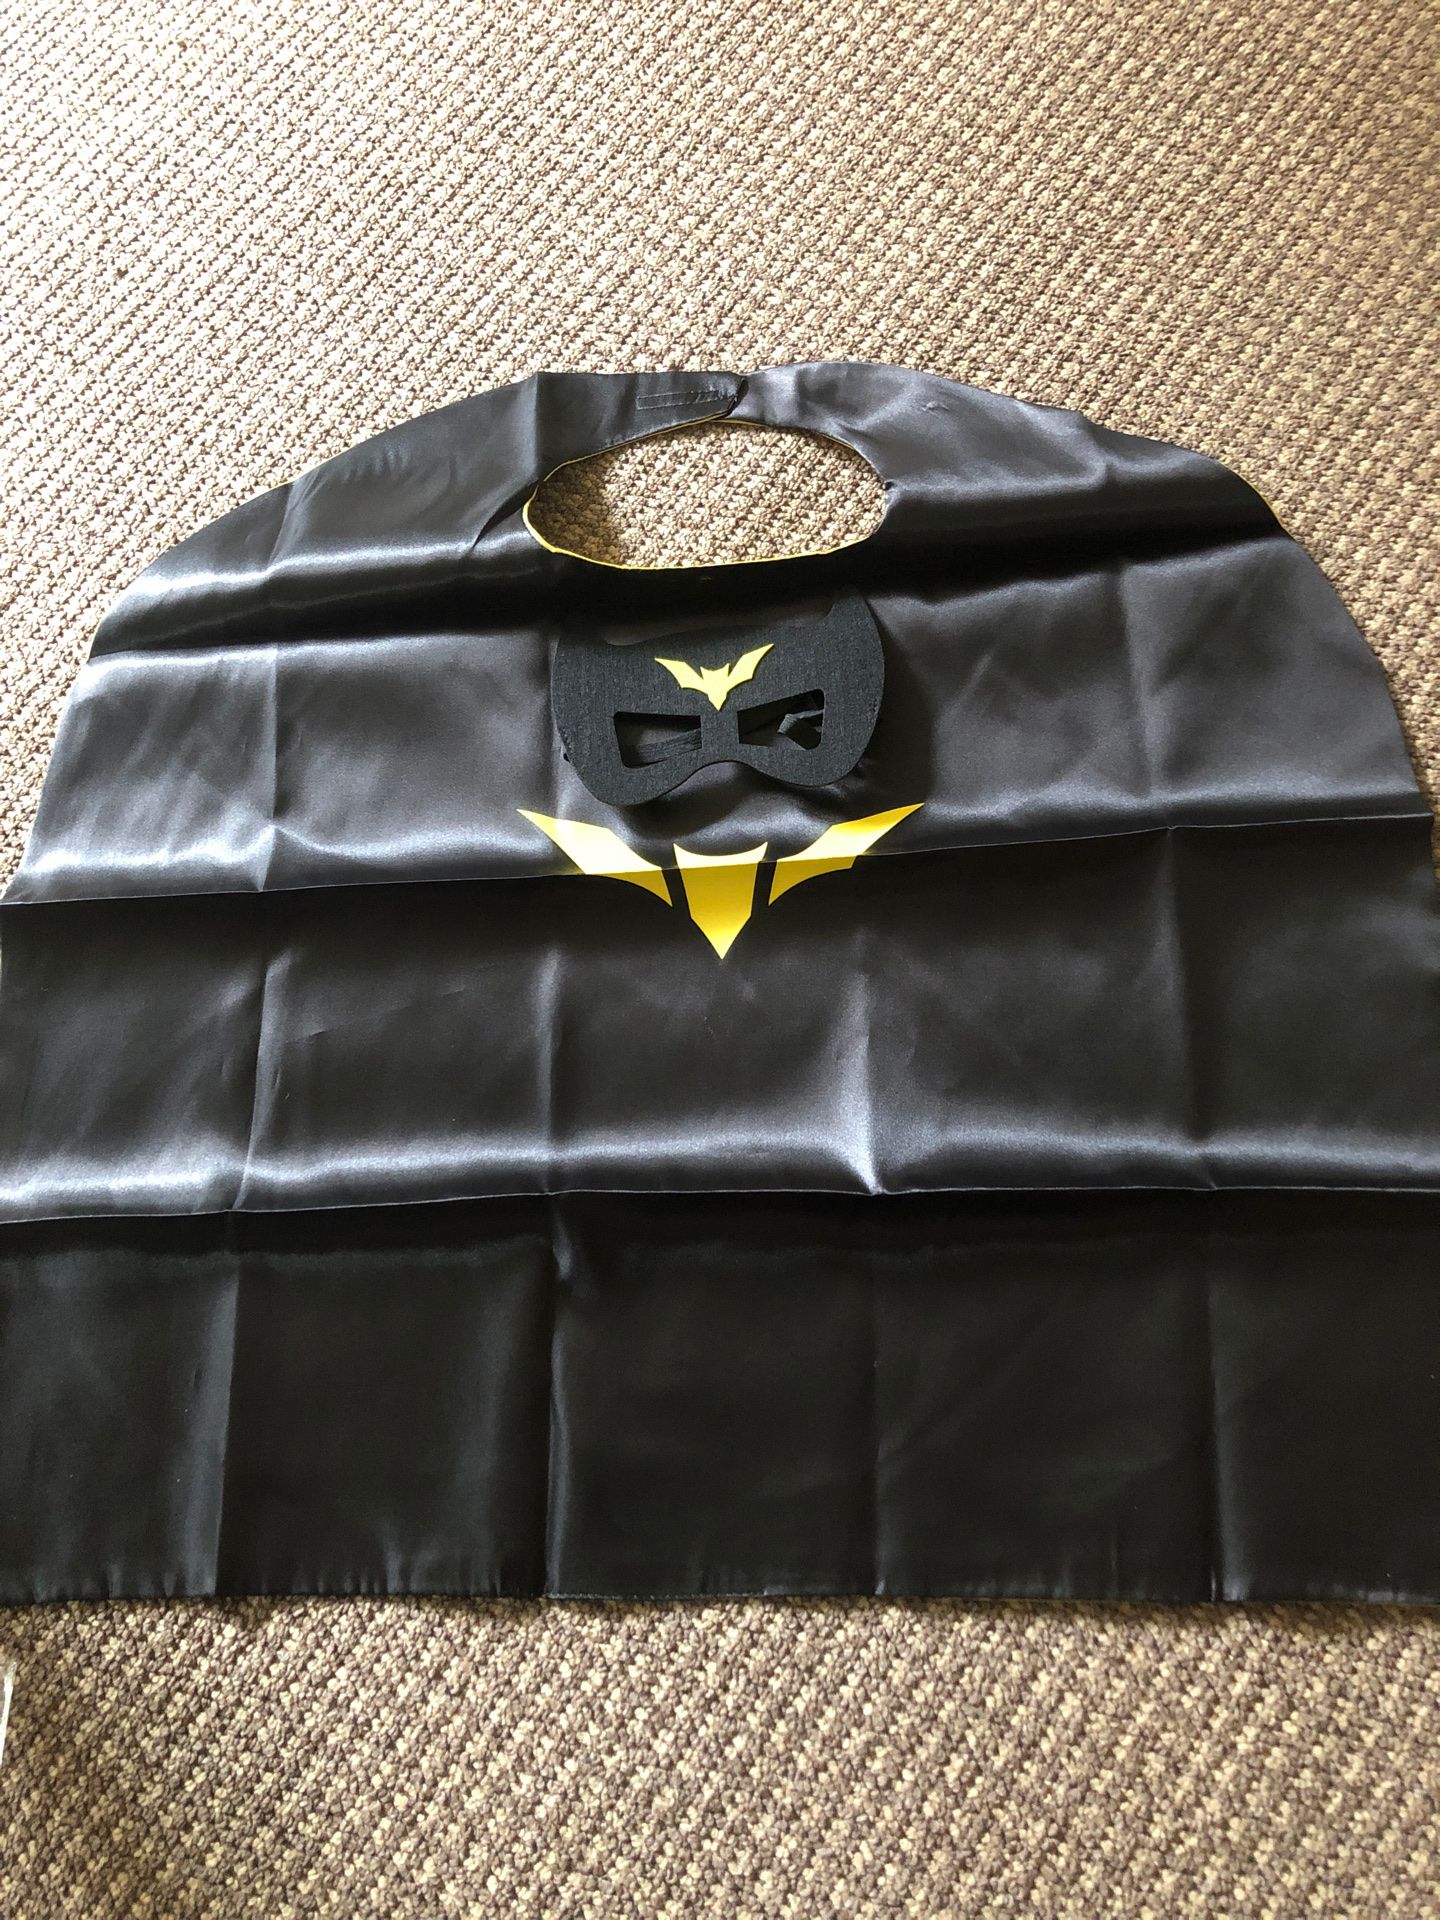 Batman cape and mask